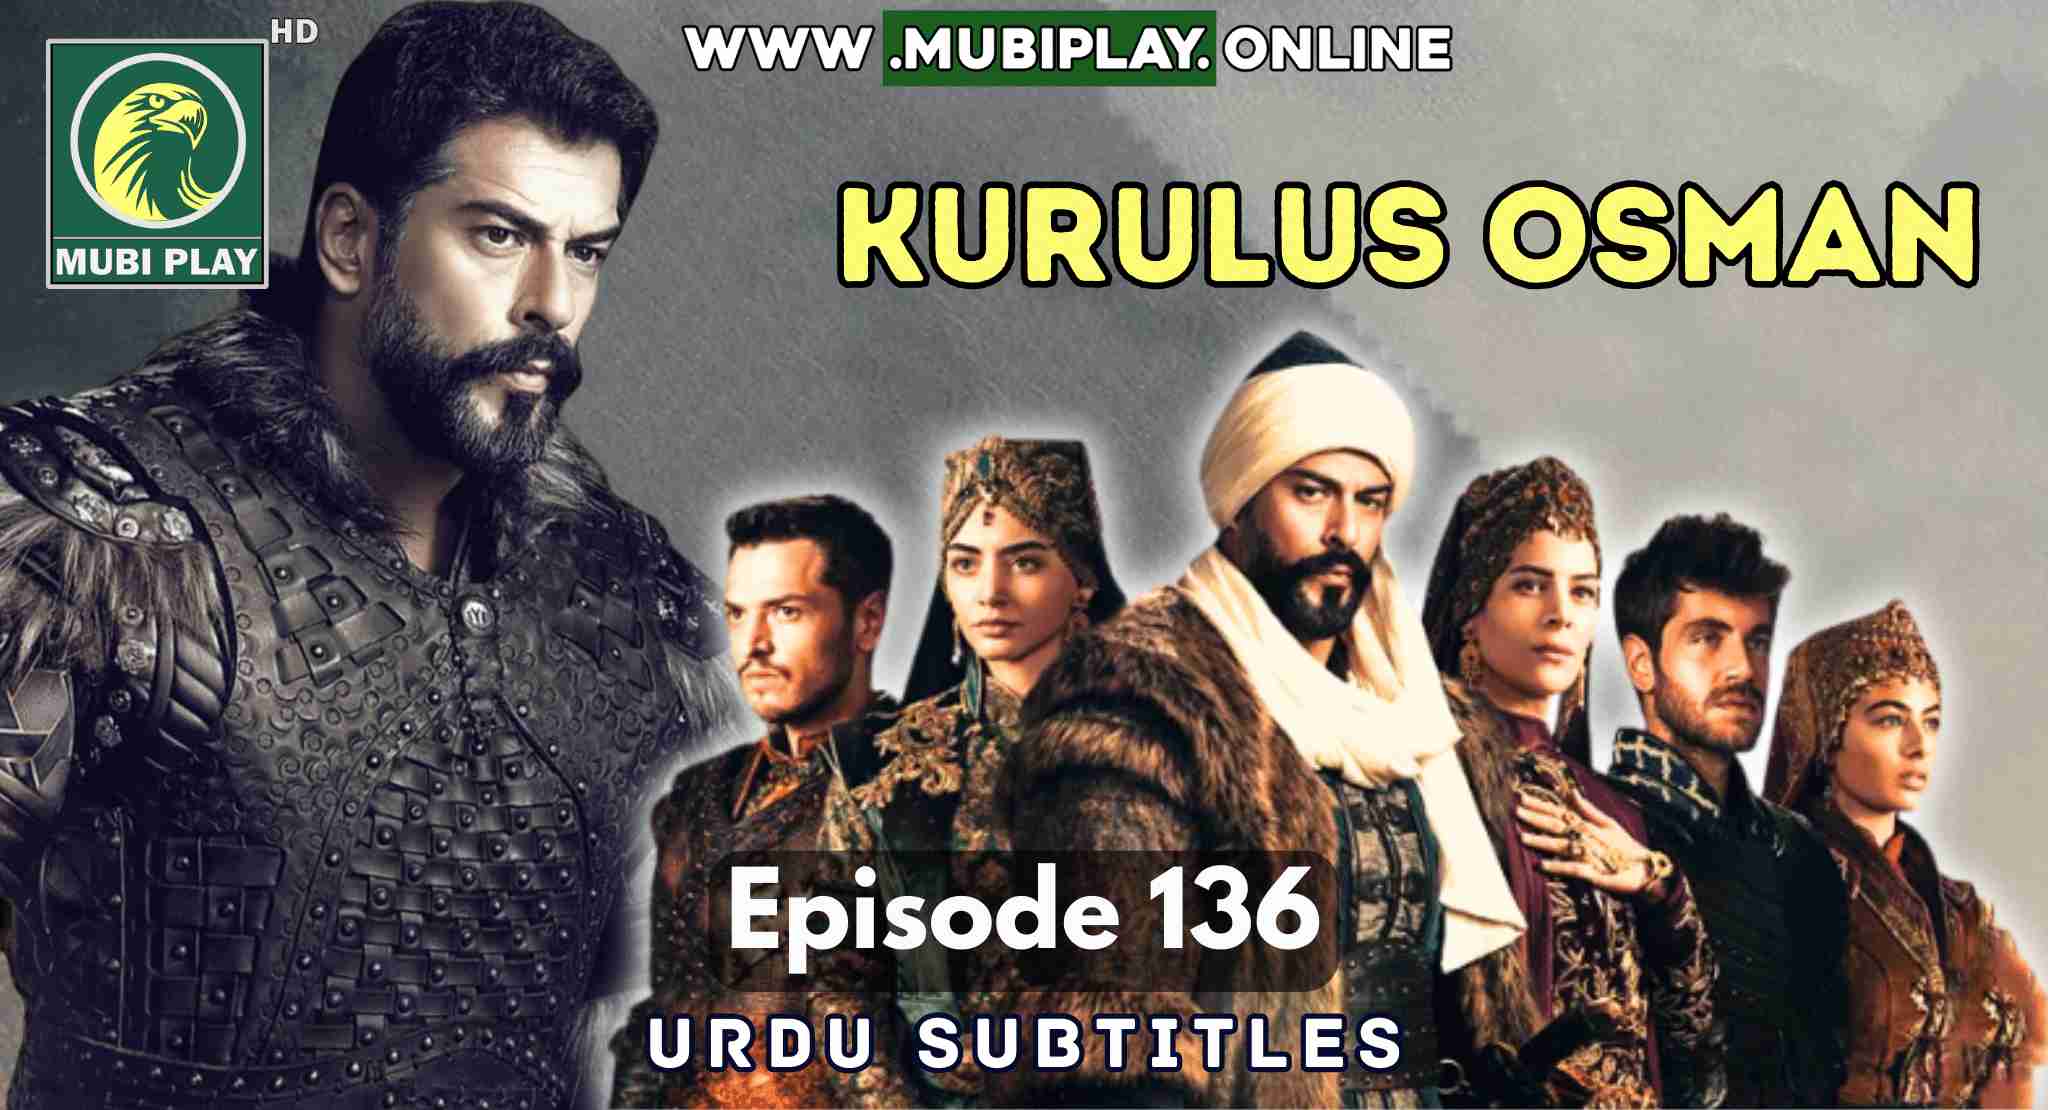 Kurulus Osman Episode 136 with Urdu Subtitles by Mubi Play